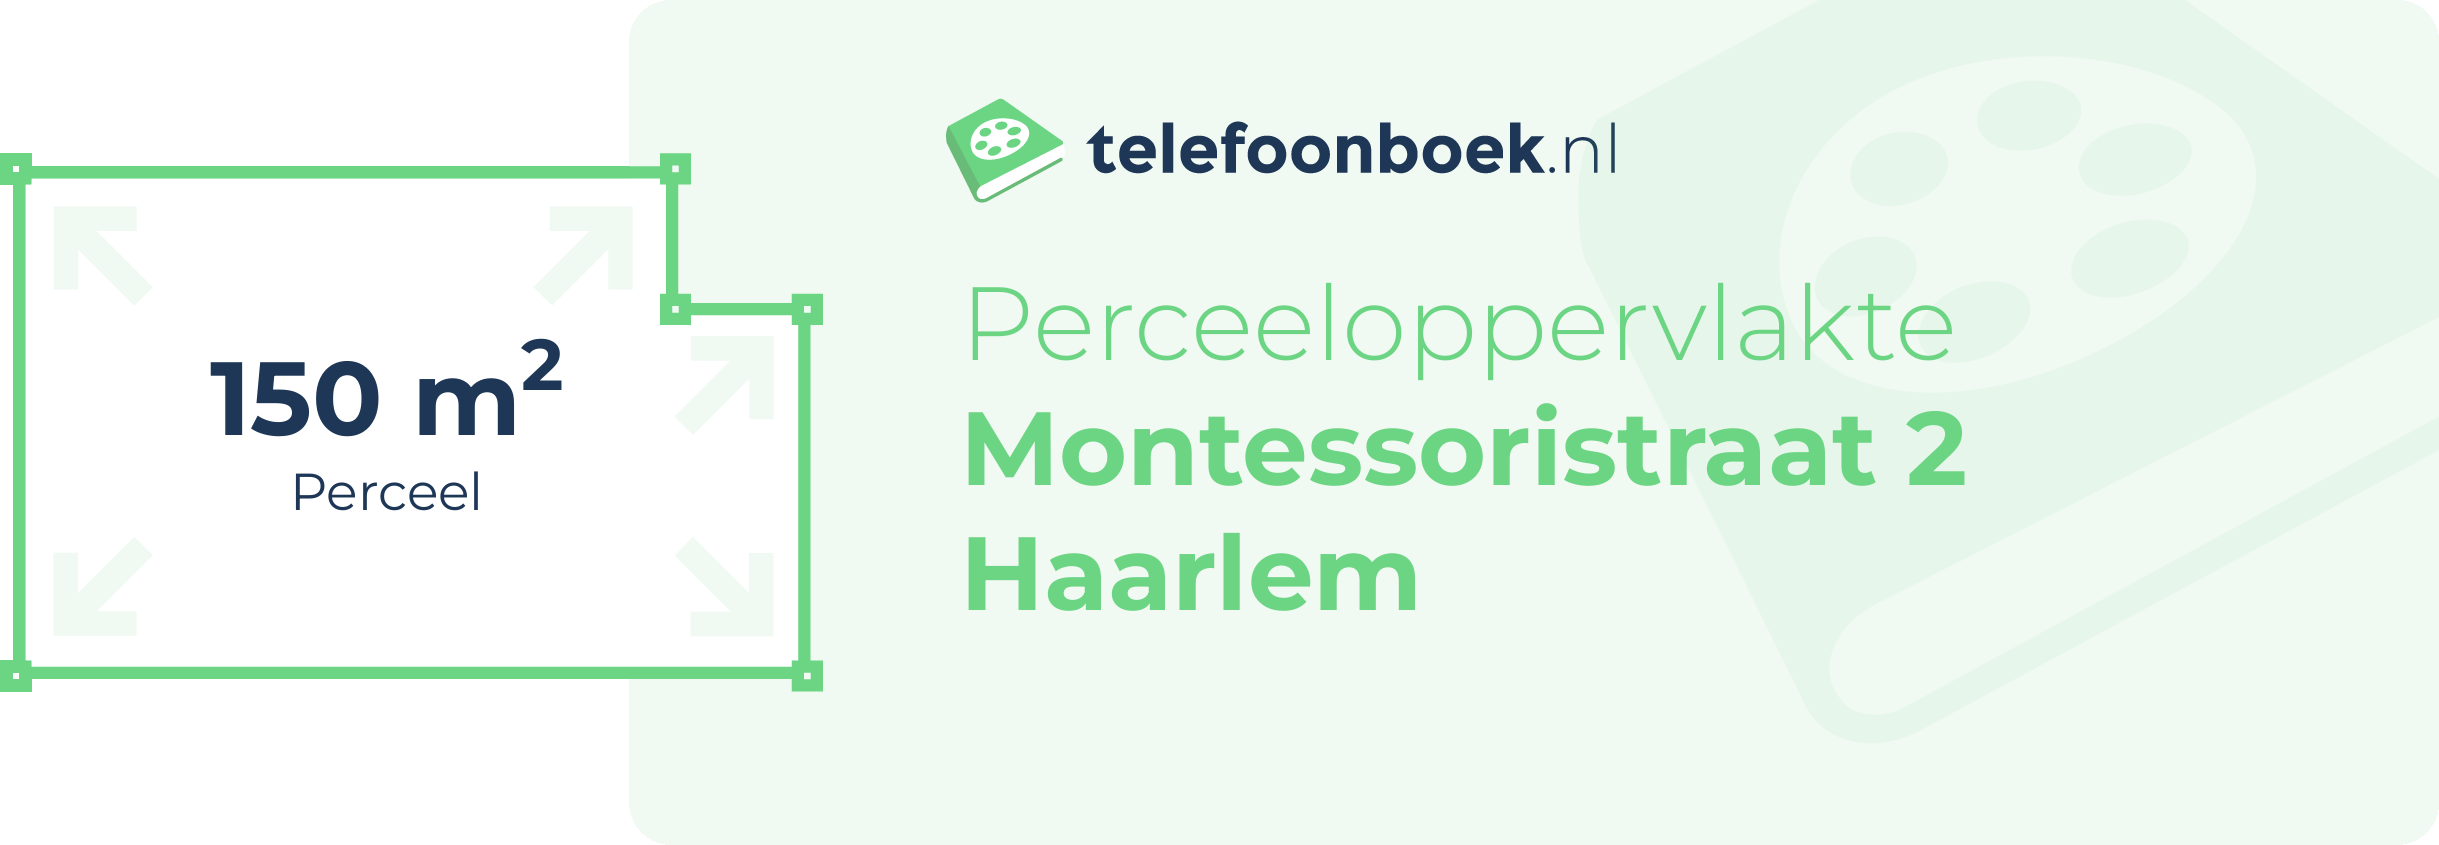 Perceeloppervlakte Montessoristraat 2 Haarlem